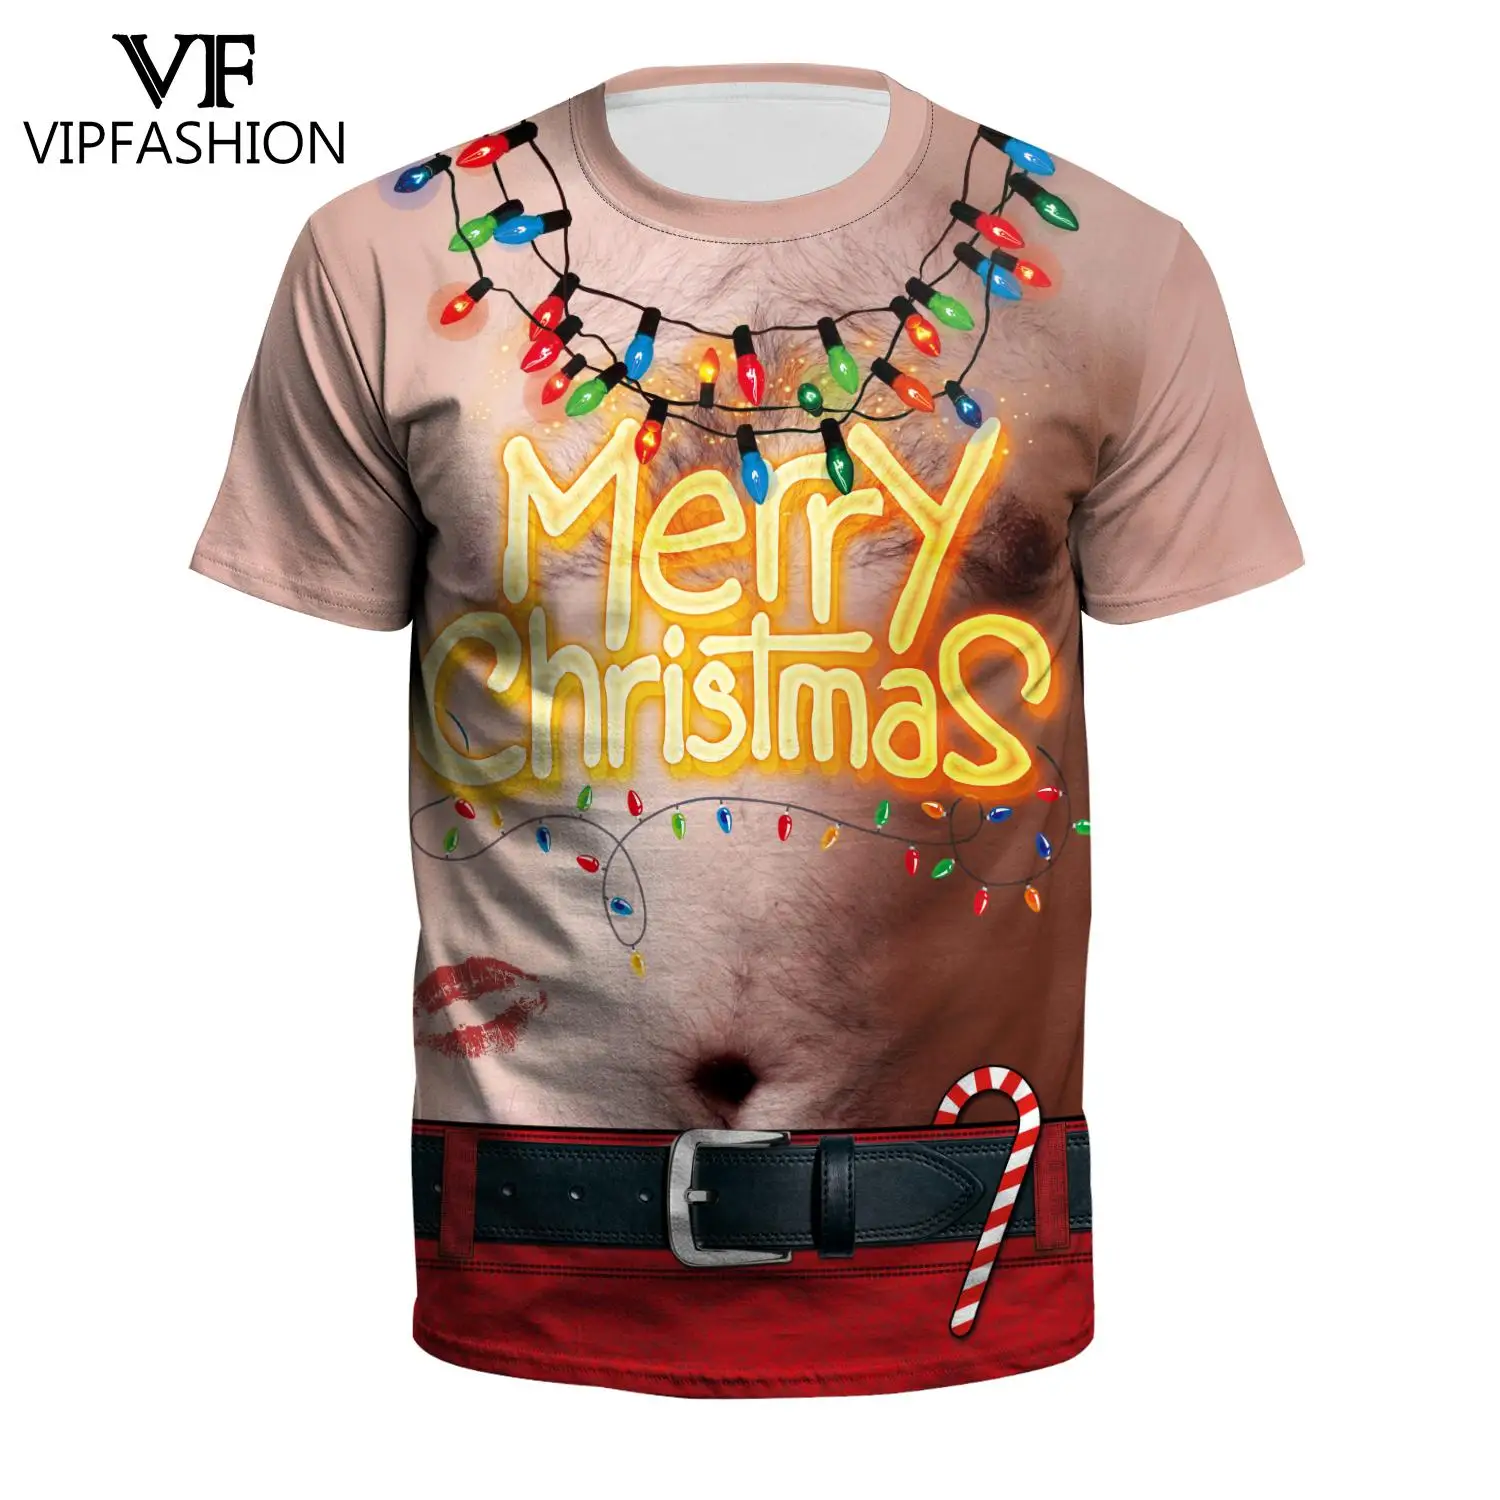 

VIP FASHION Summer Funny 3D printed Muscle Merry Christmas Santa Casual Tee Shirt Funny Short-Sleeve Clothes